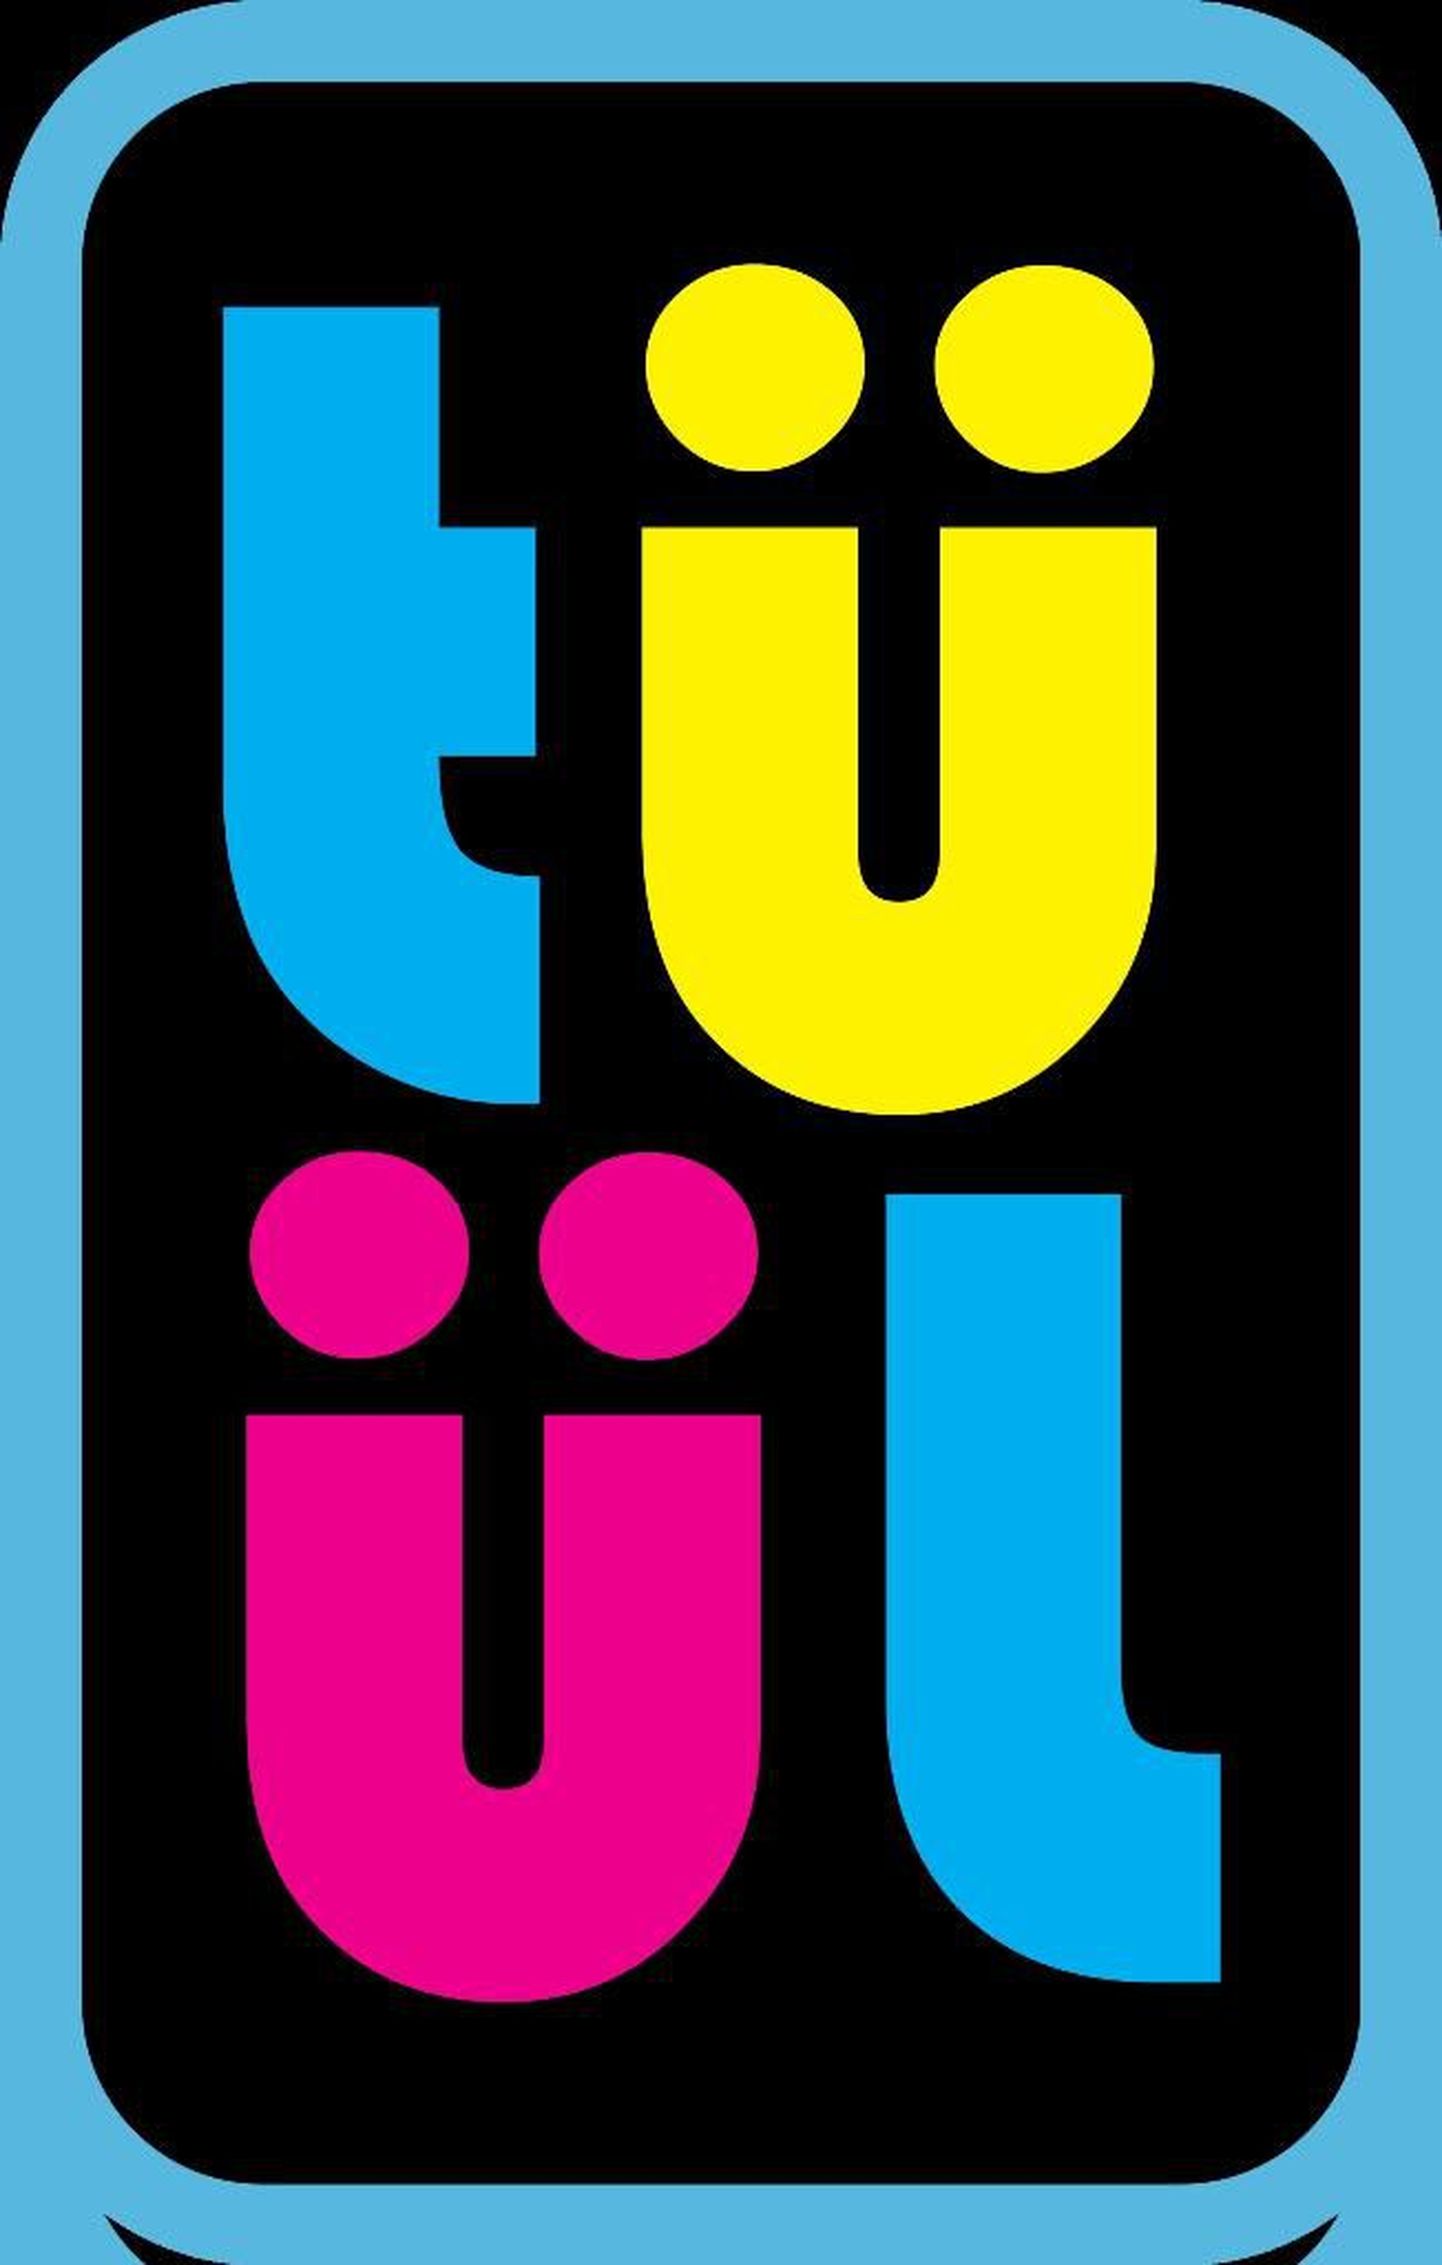 Tallinna üliõpilaste logo.